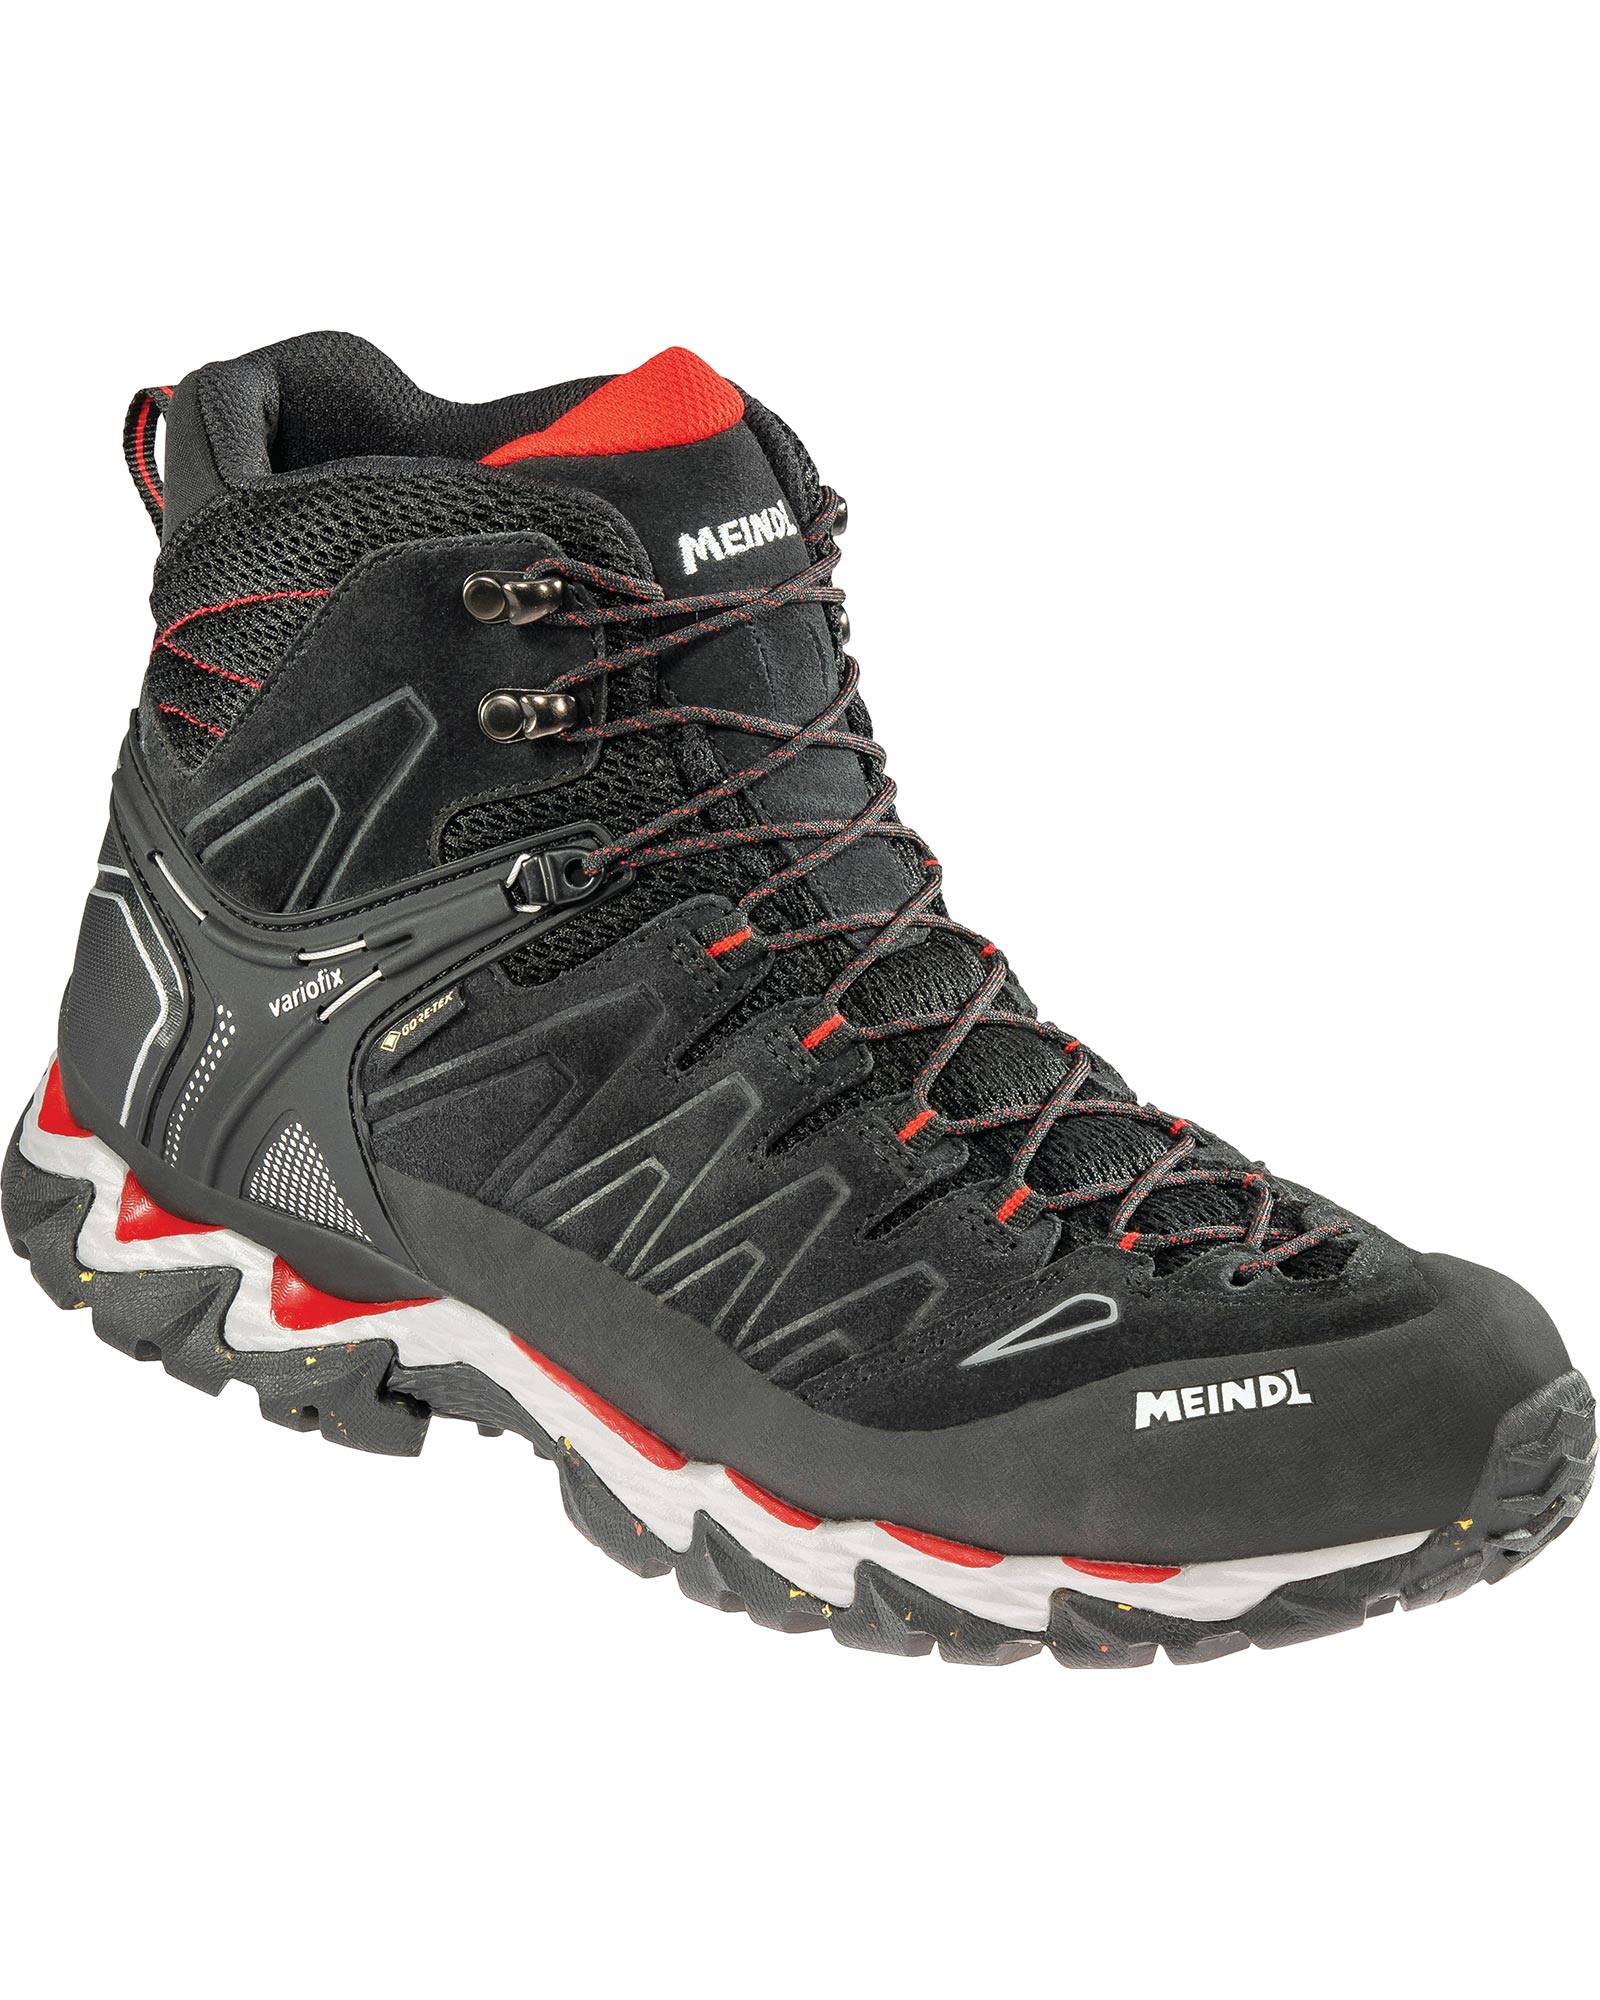 Meindl Lite Hike GORE TEX Men’s Boots - Black/Red UK 10.5